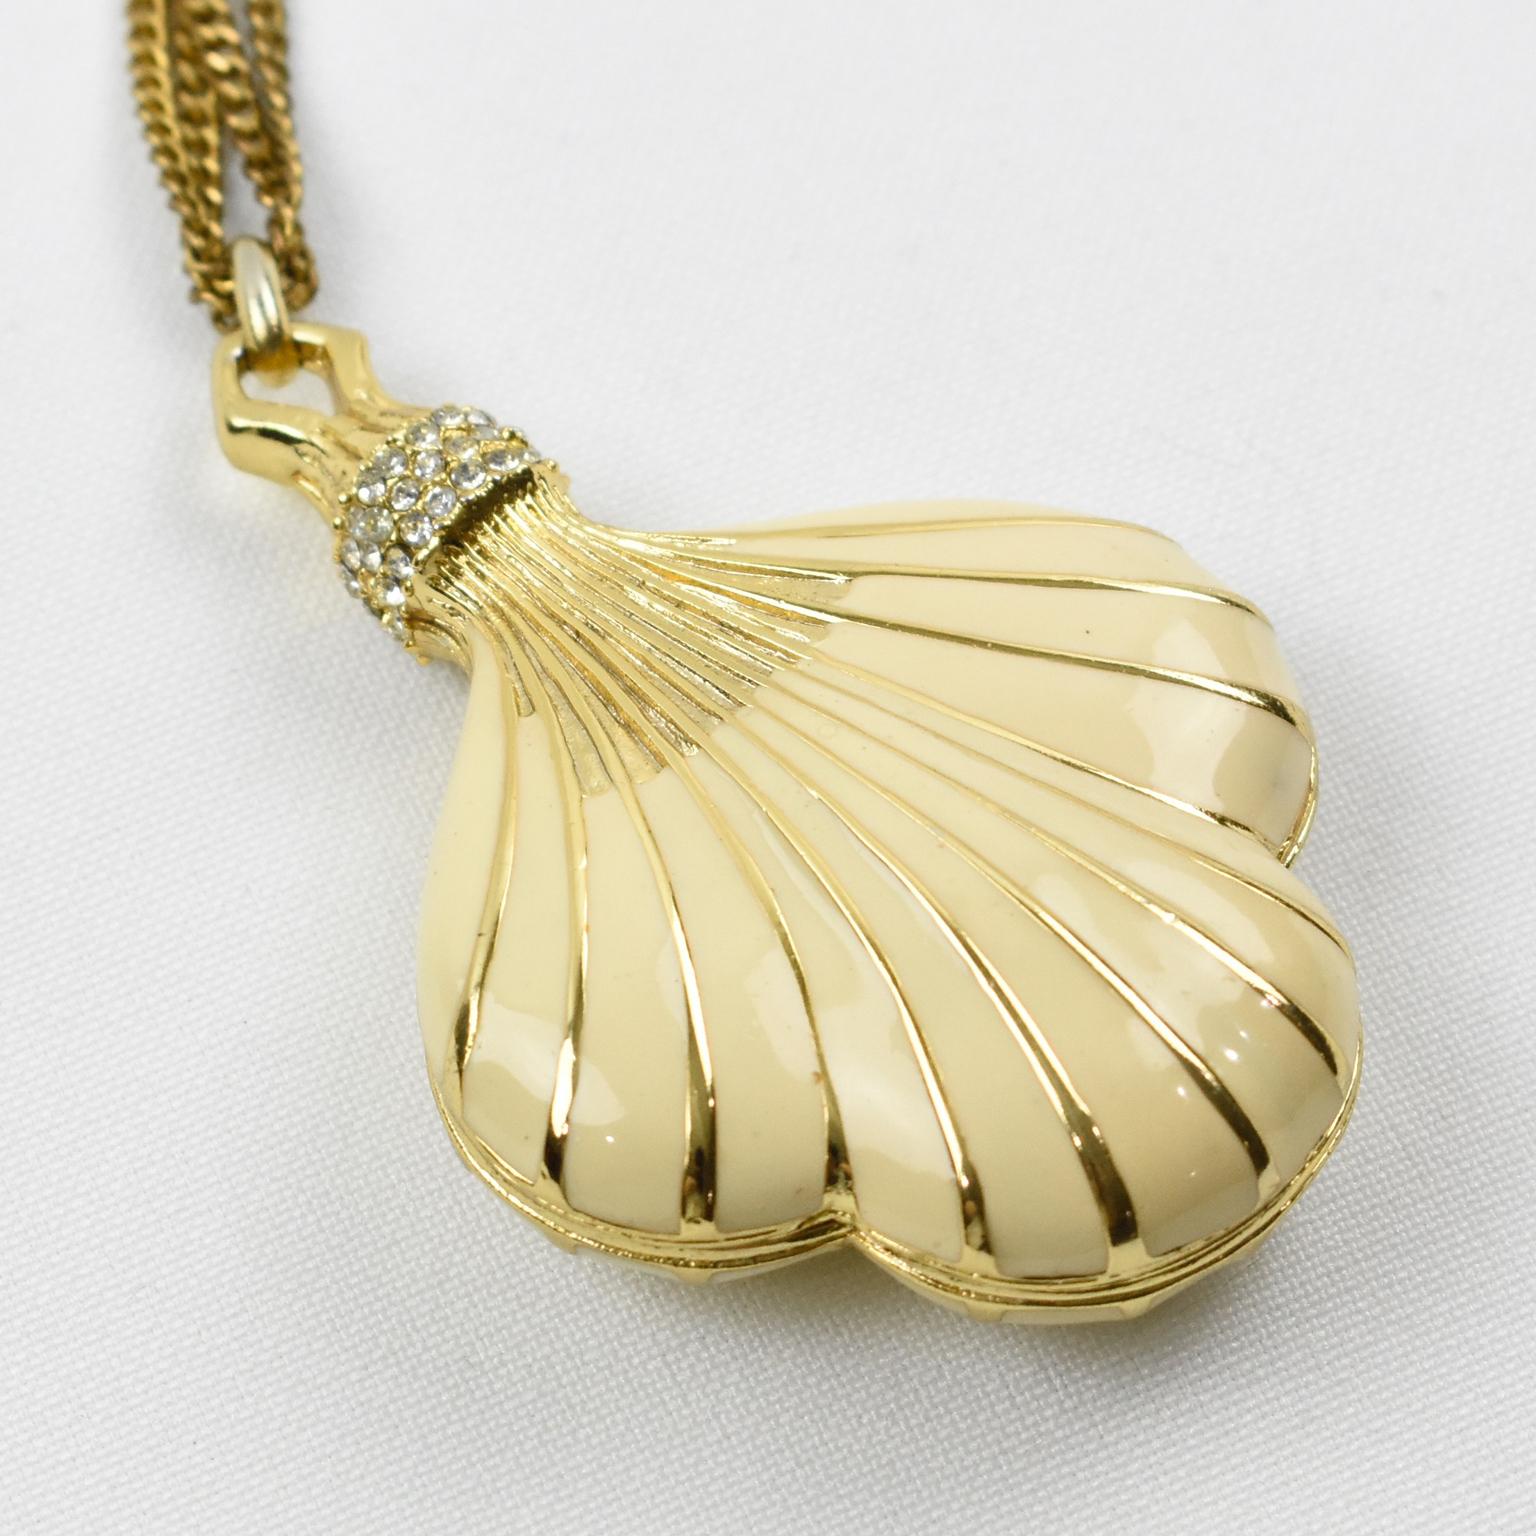 Lanvin Paris Signed Necklace Modernist Gilt Metal and Enamel Seashell Pendant 1